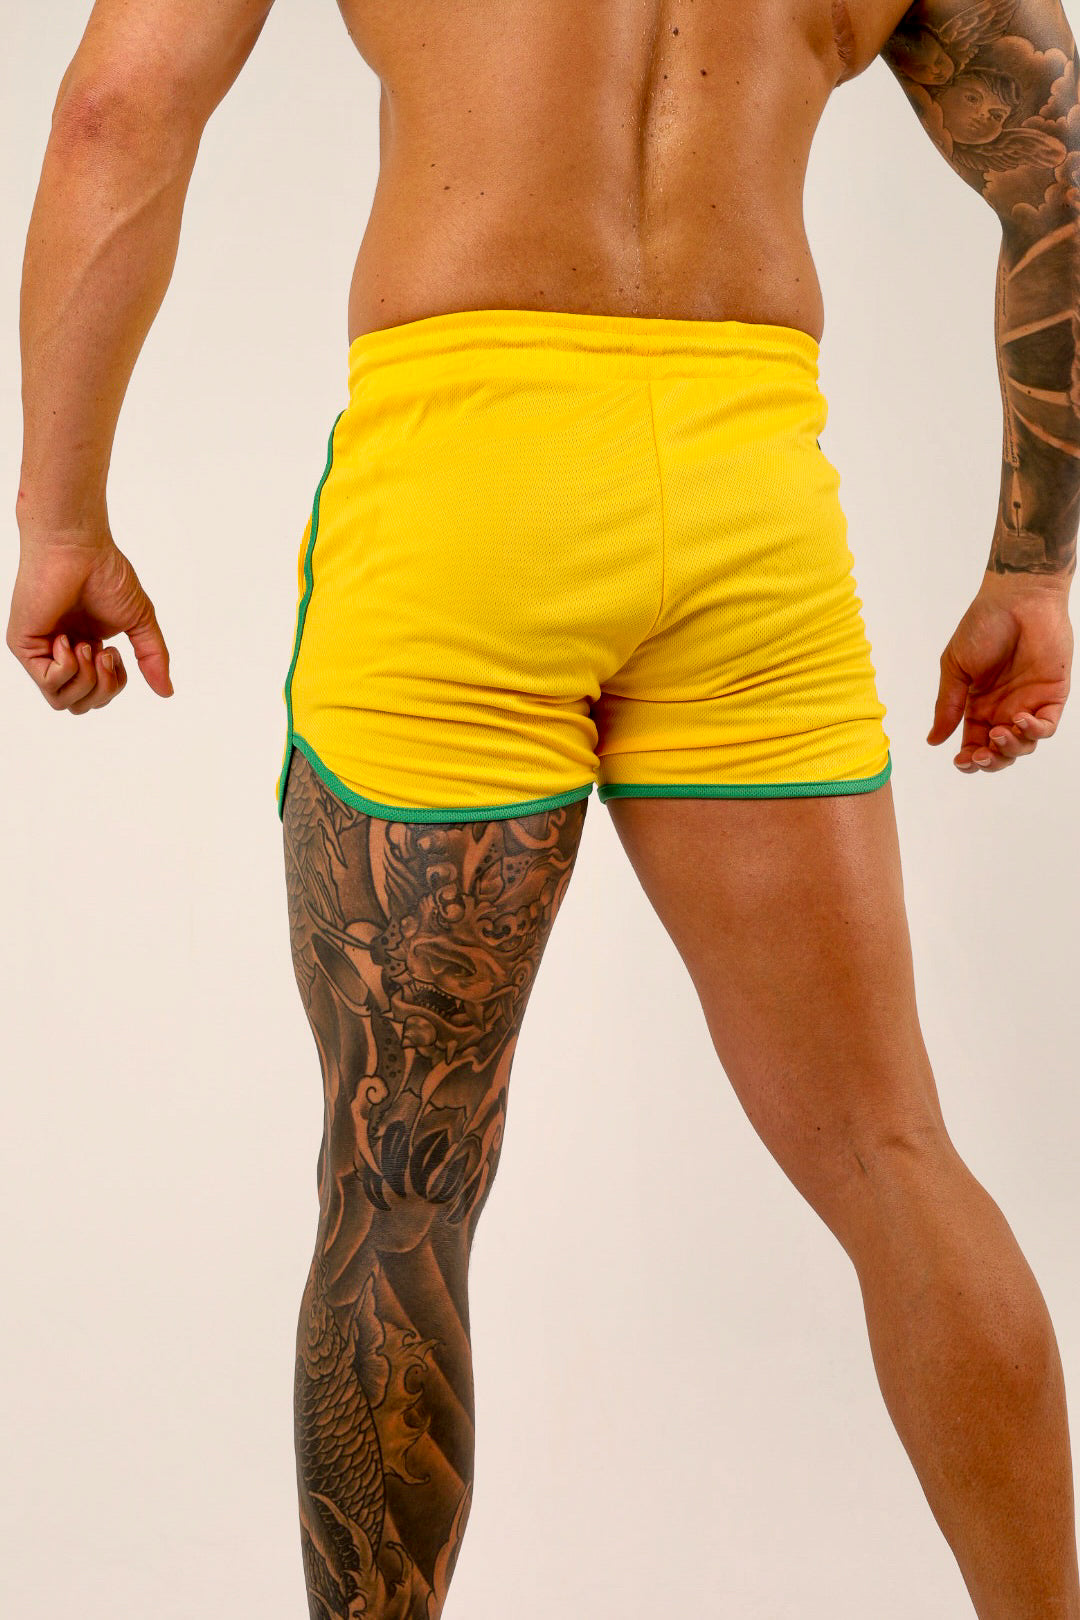 Retro Shorts - Gold & Green